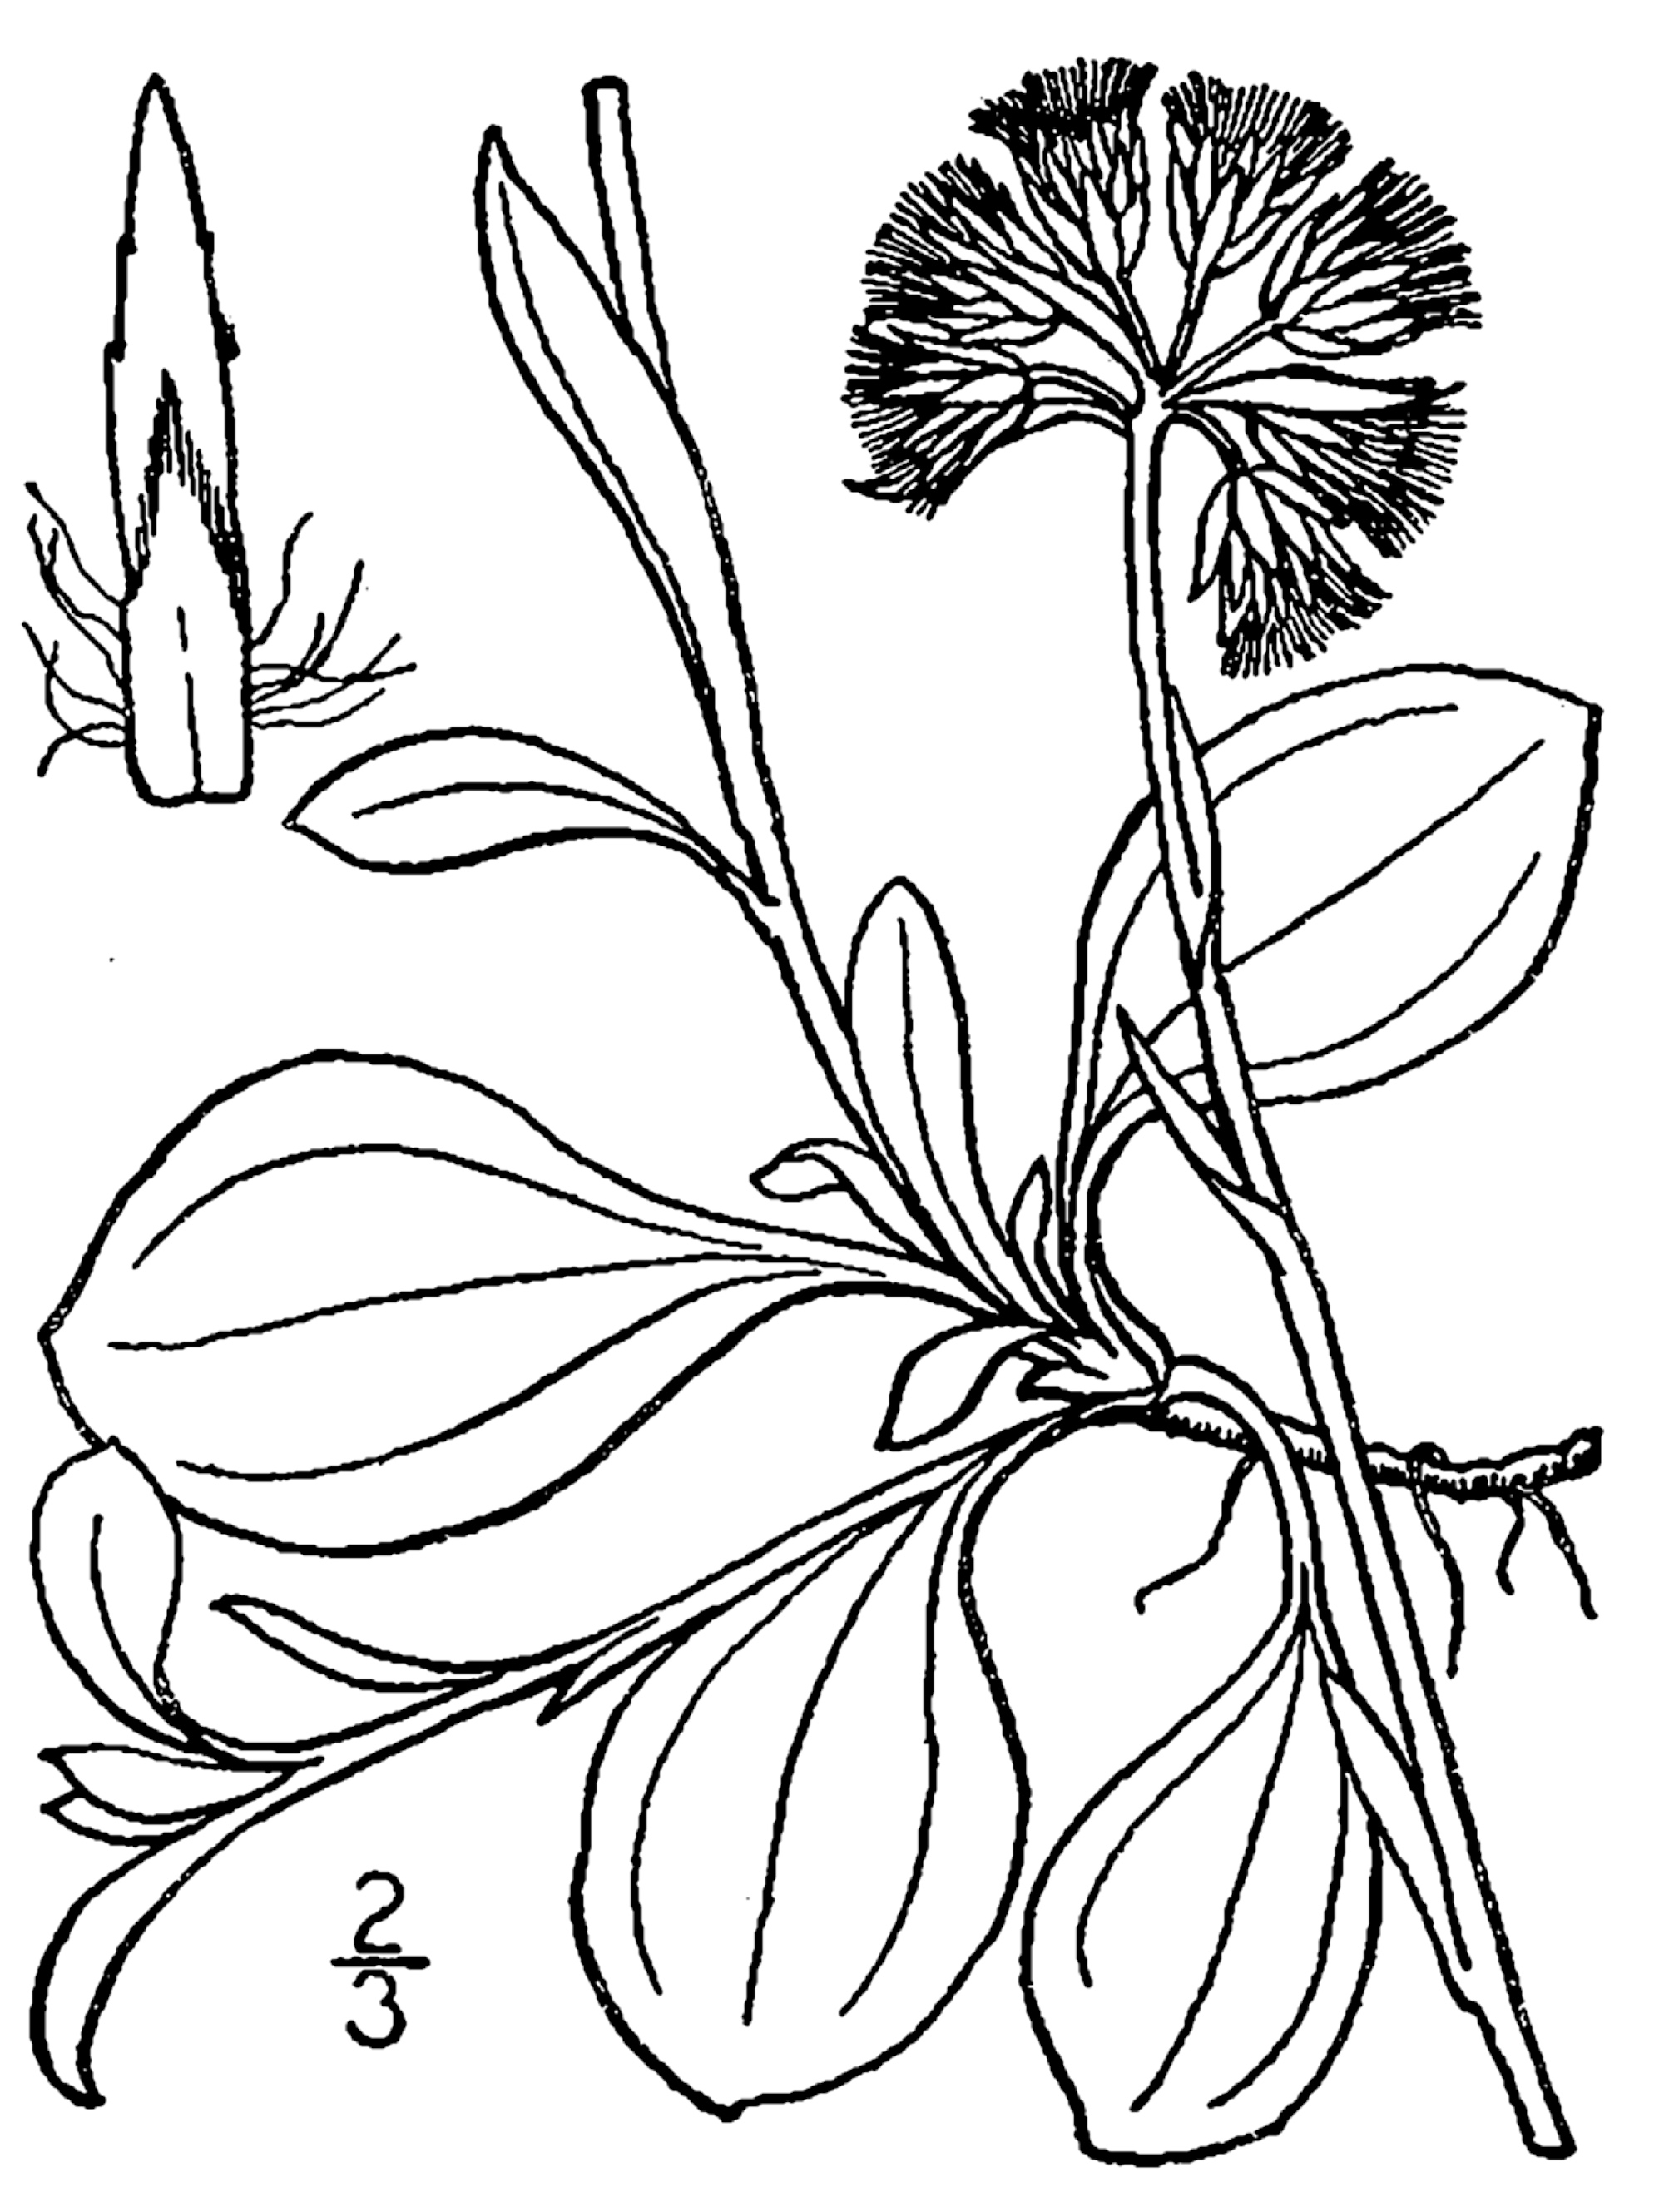 USDA Parlin's Pussytoes botanical illustration circa 1913..